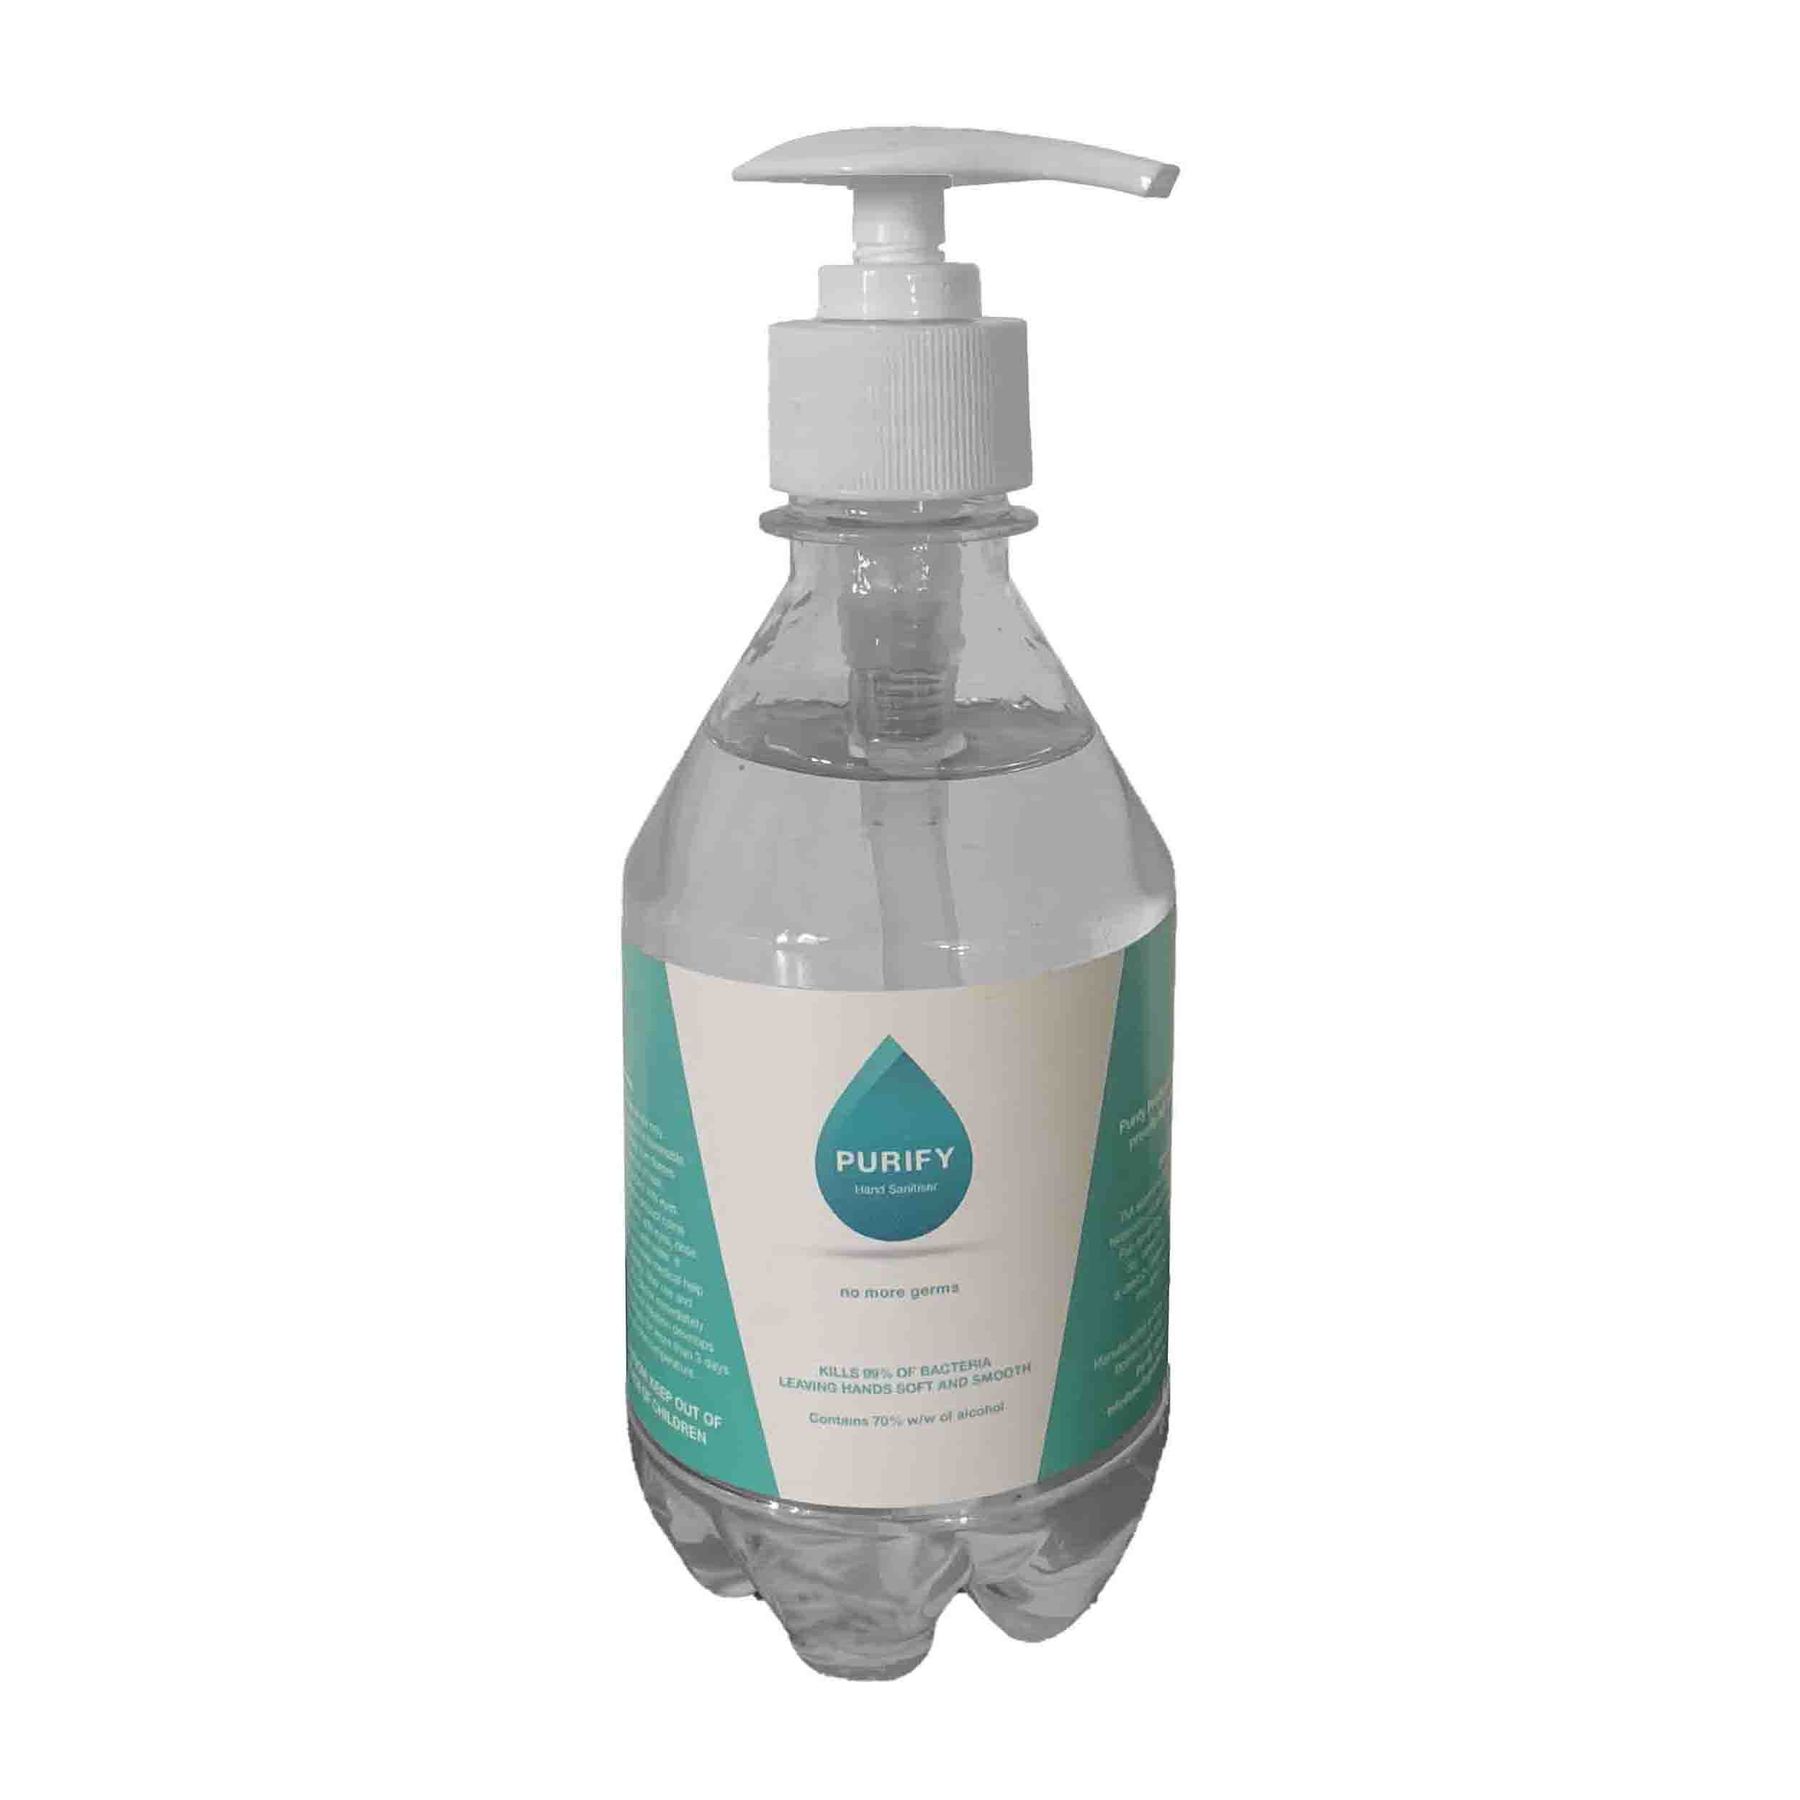 Purify Hand Sanitiser - 375ml Pump Bottle